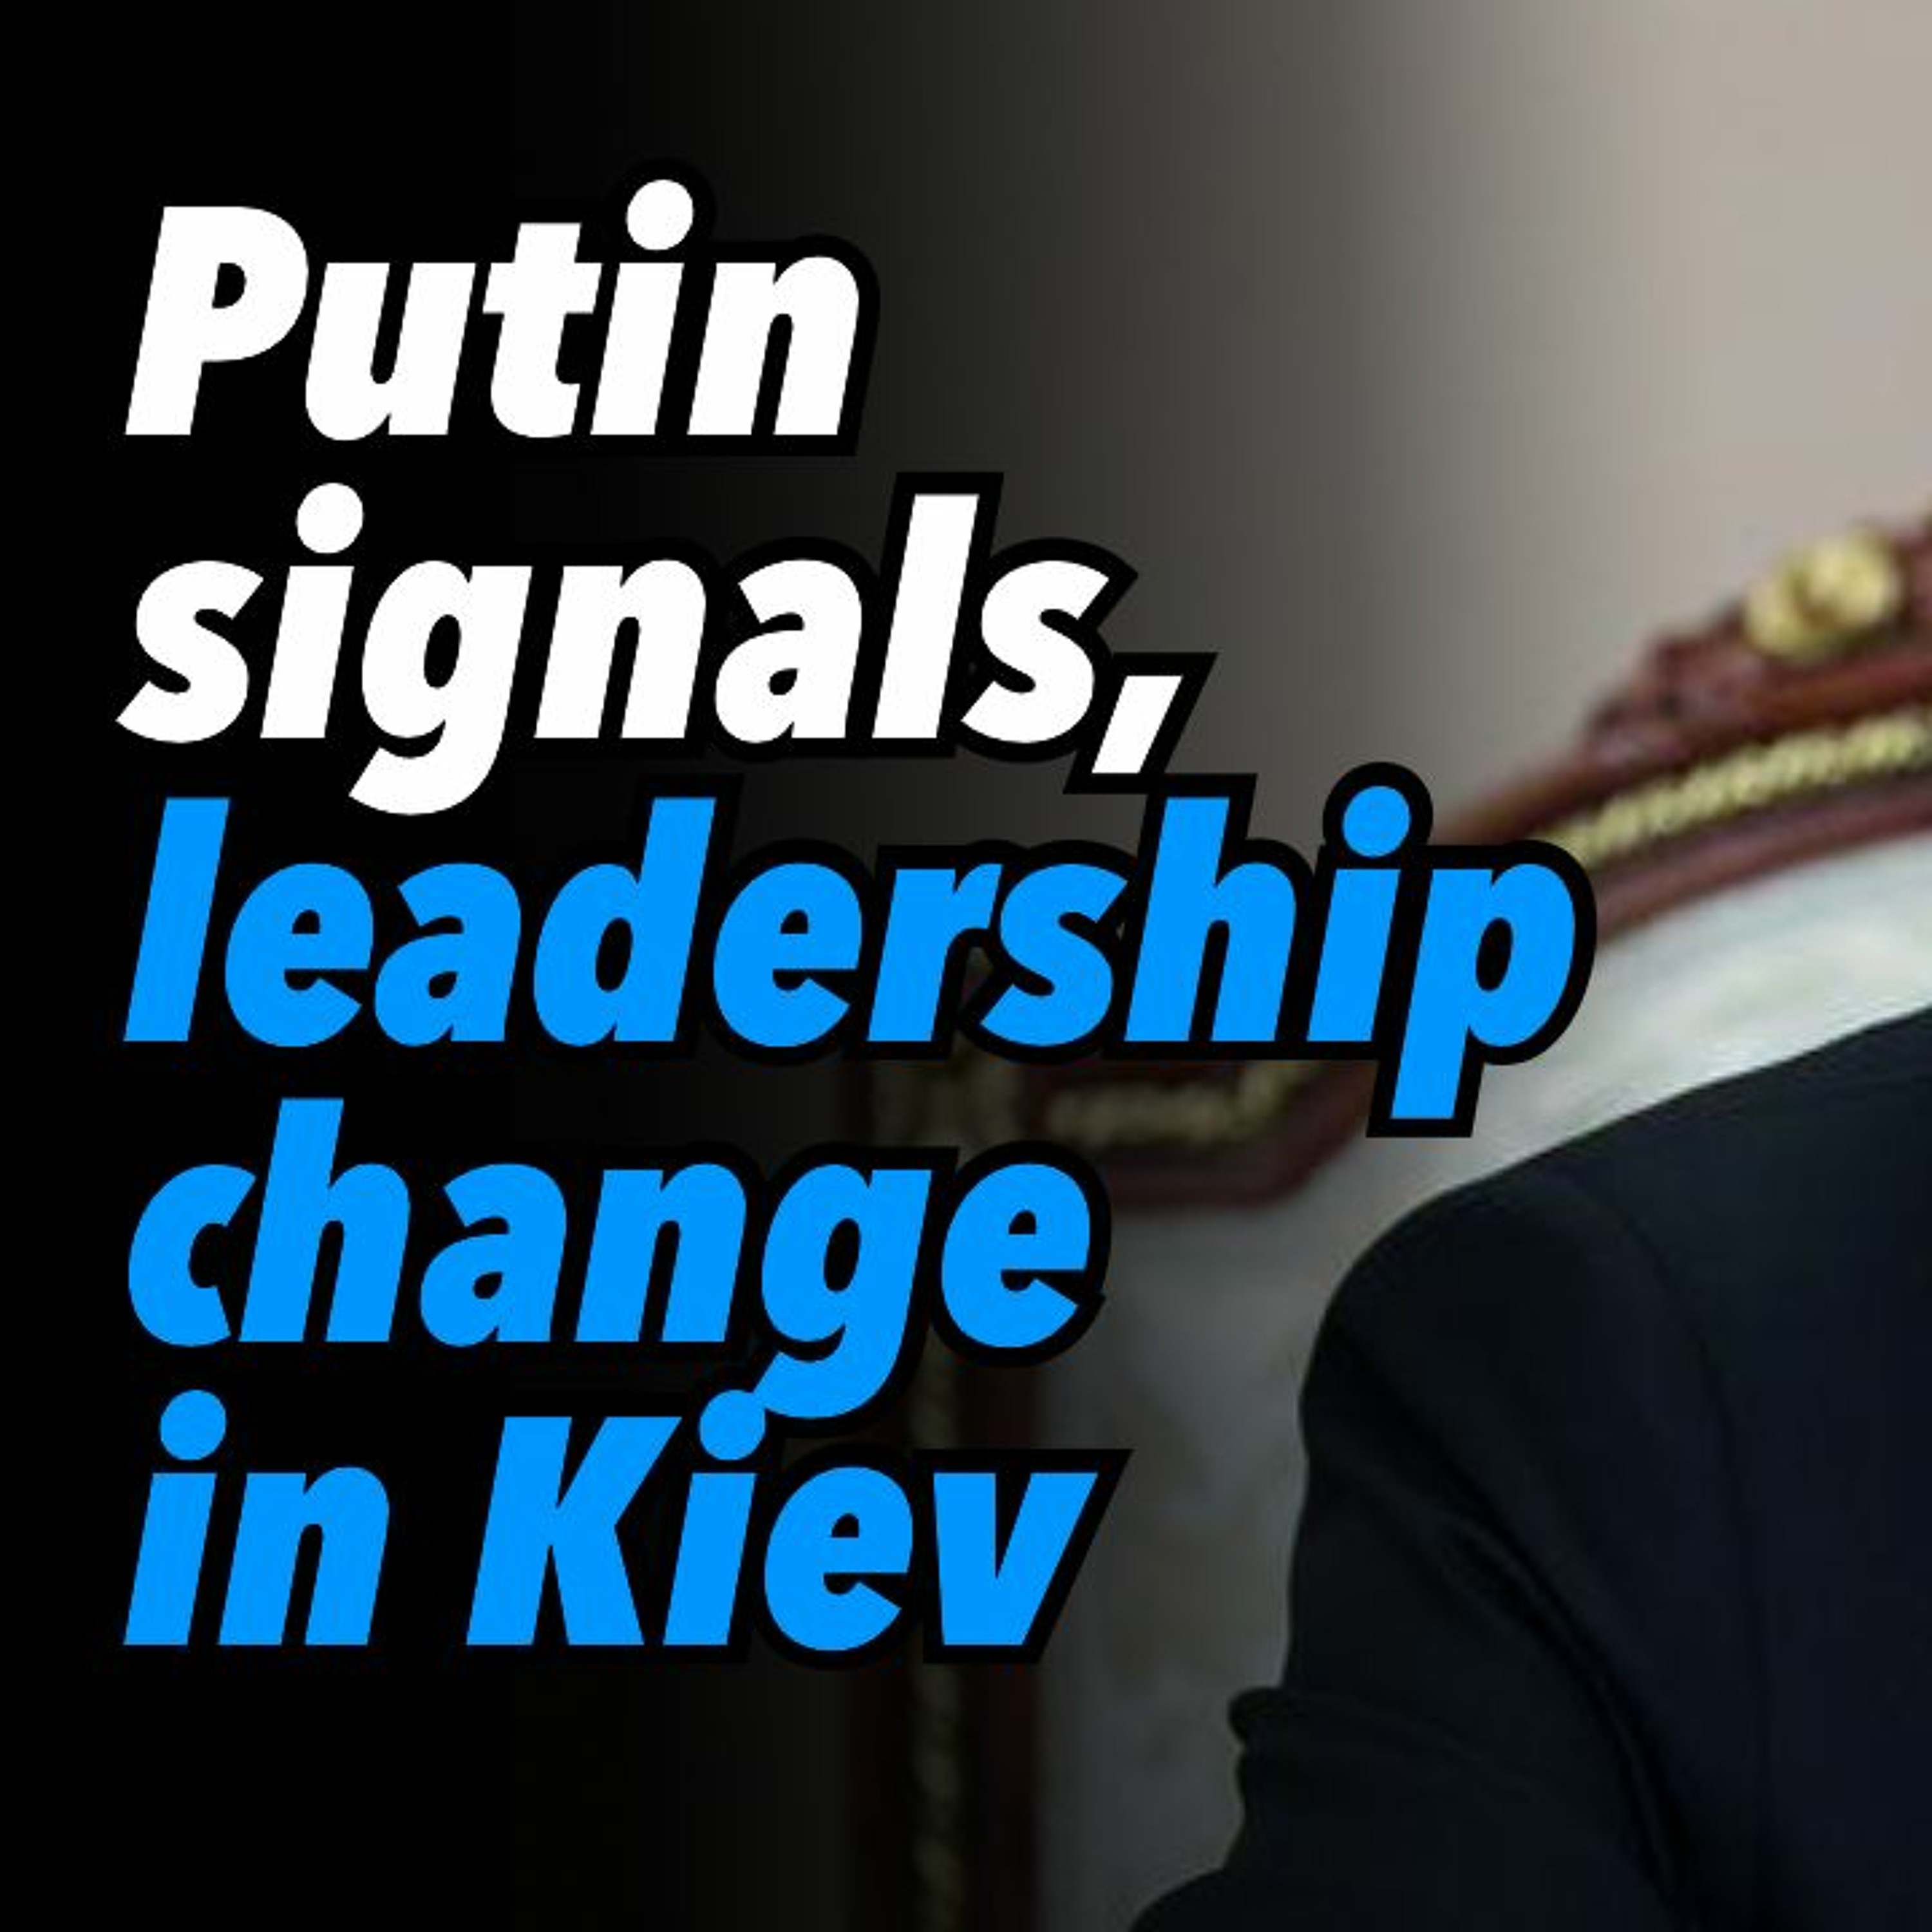 Putin signals, leadership change in Kiev